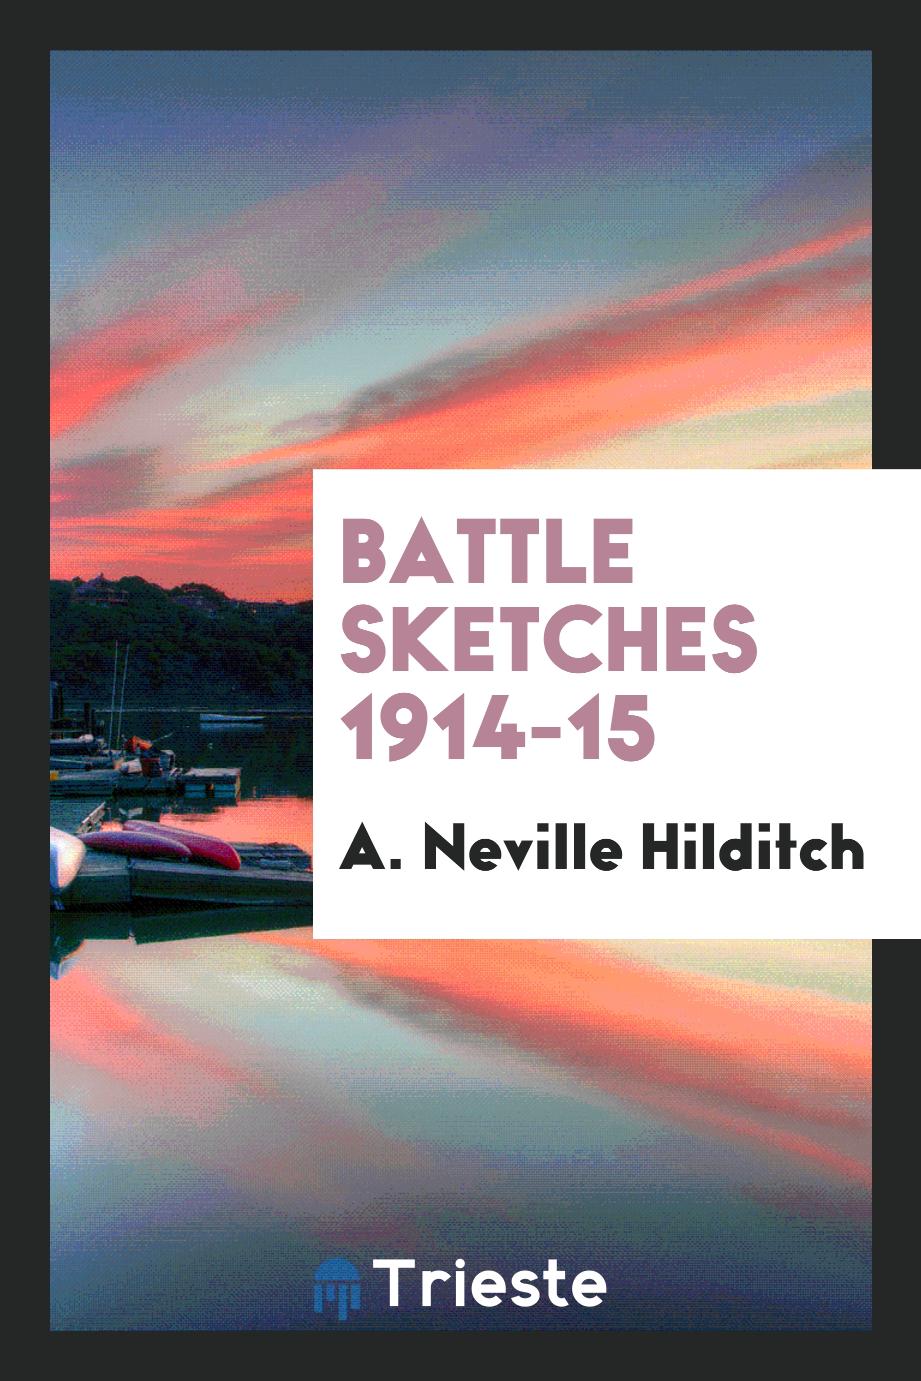 Battle sketches 1914-15